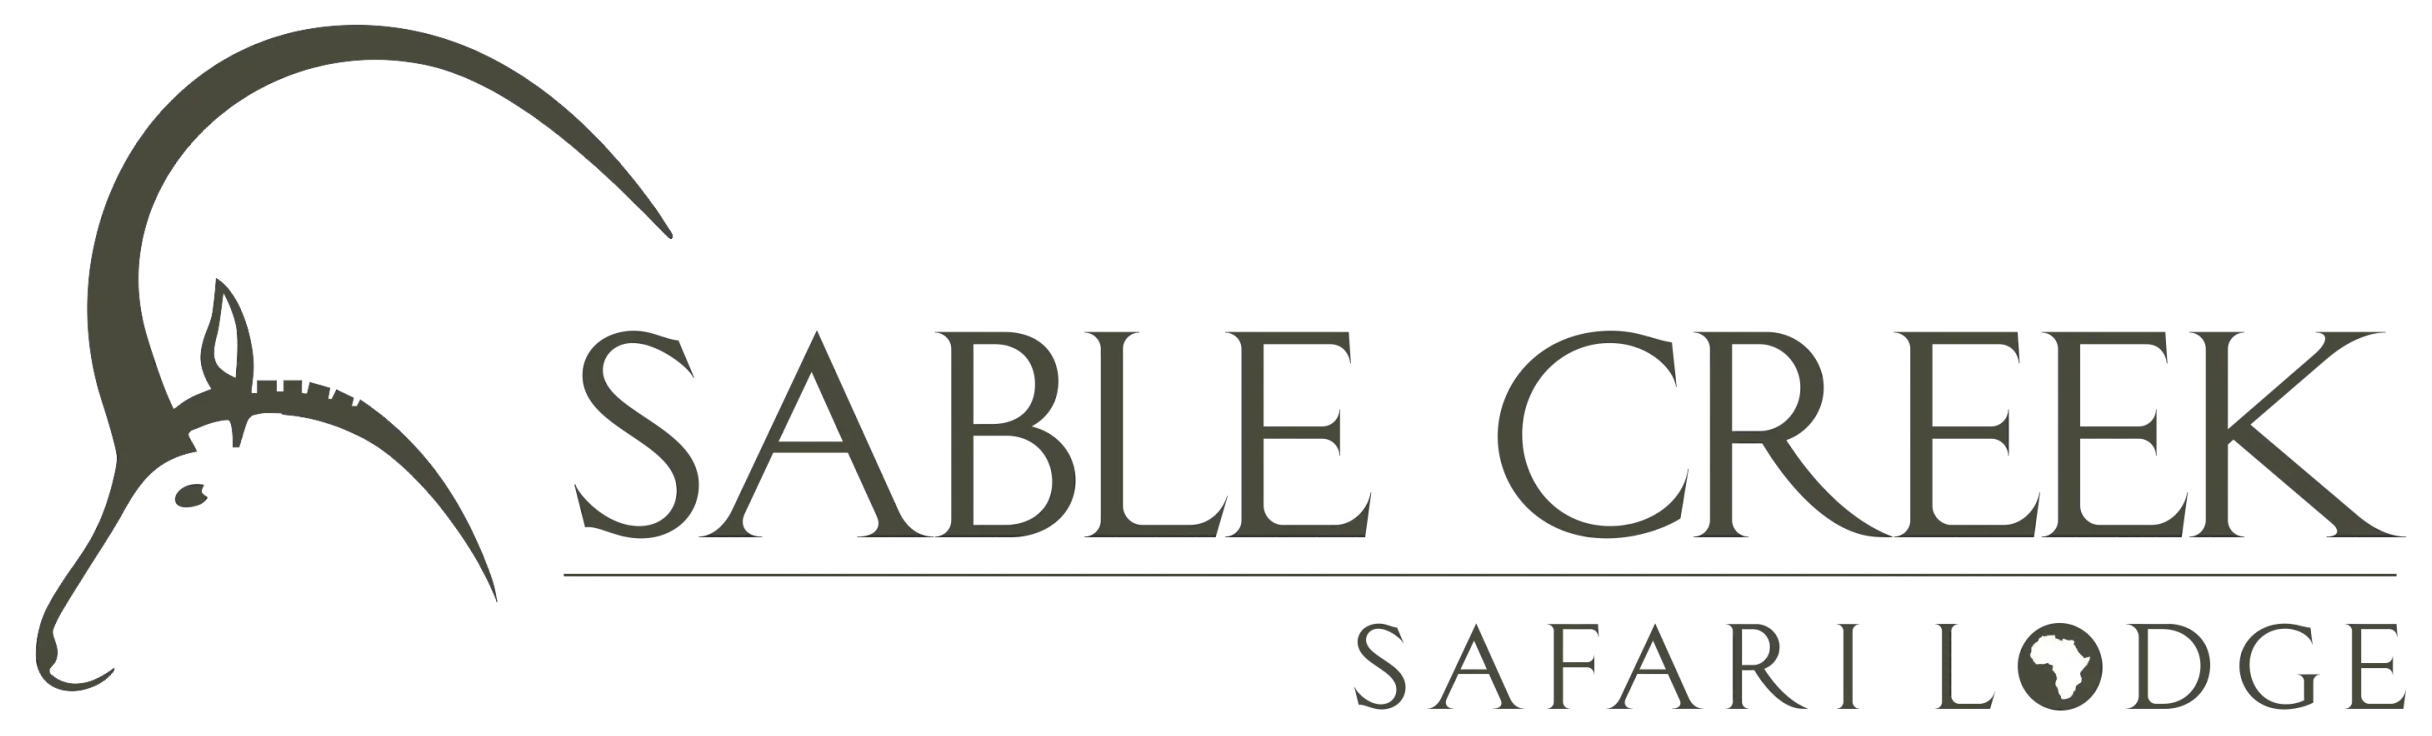 Sable Creek Safari Lodge Logo